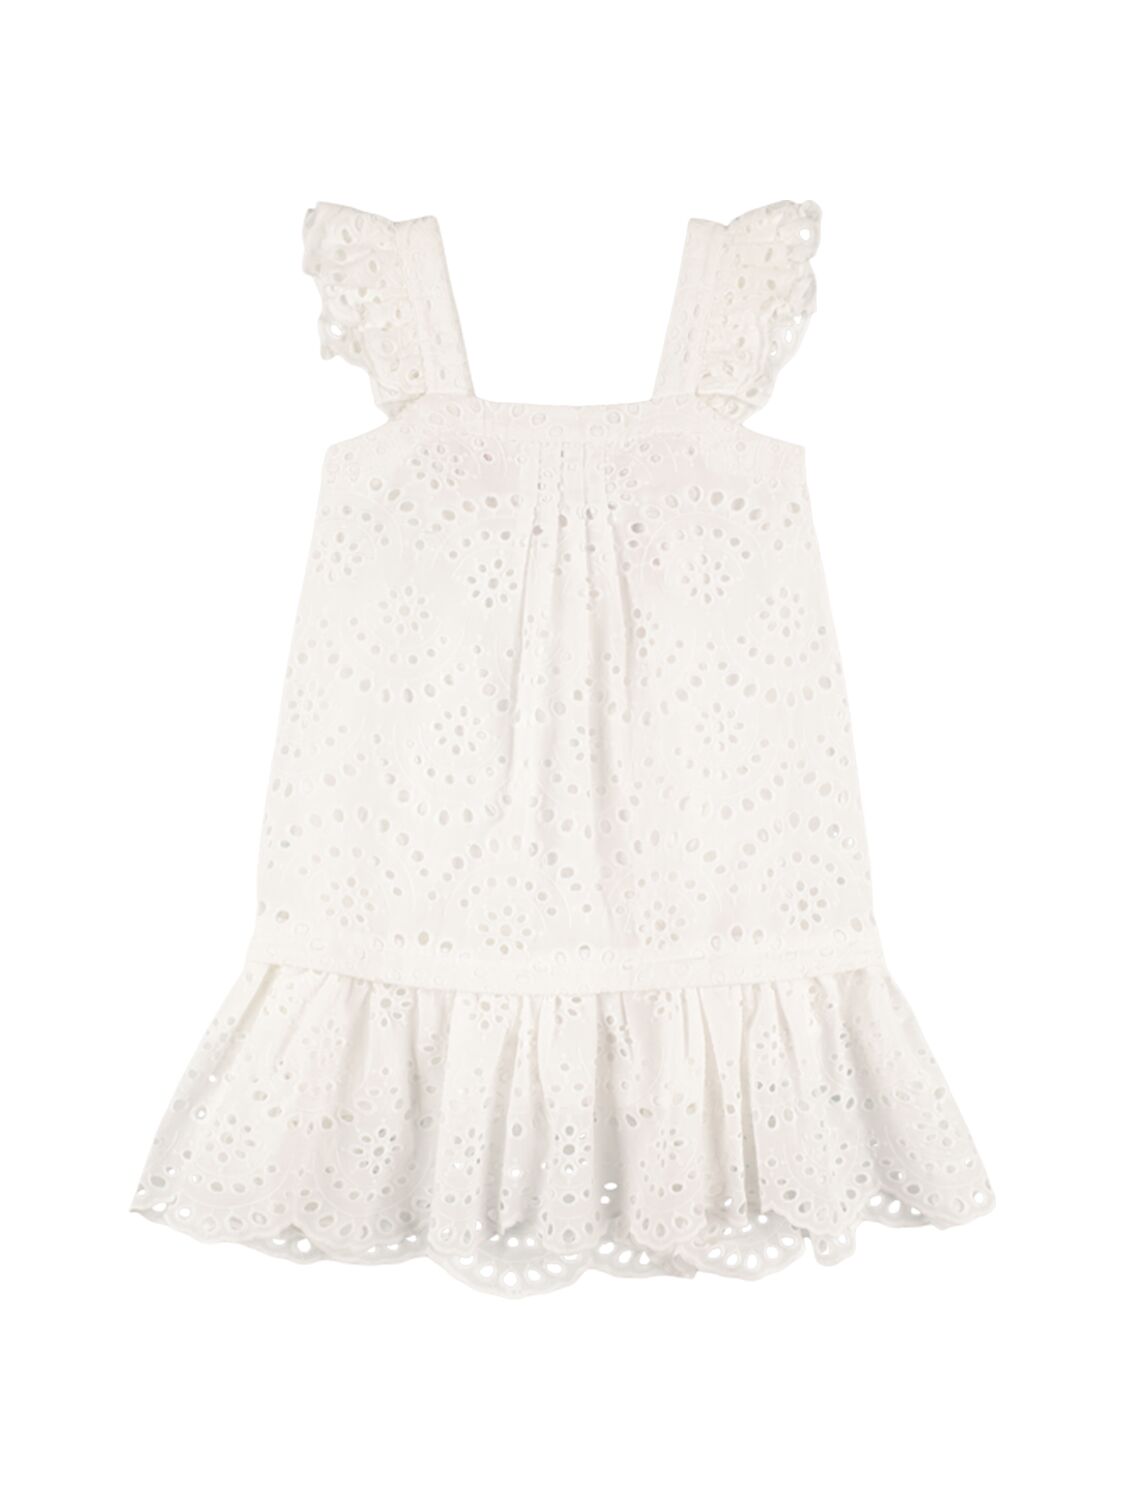 Max & Co Kids' Cotton Eyelet Lace Dress W/ Ruffles In White